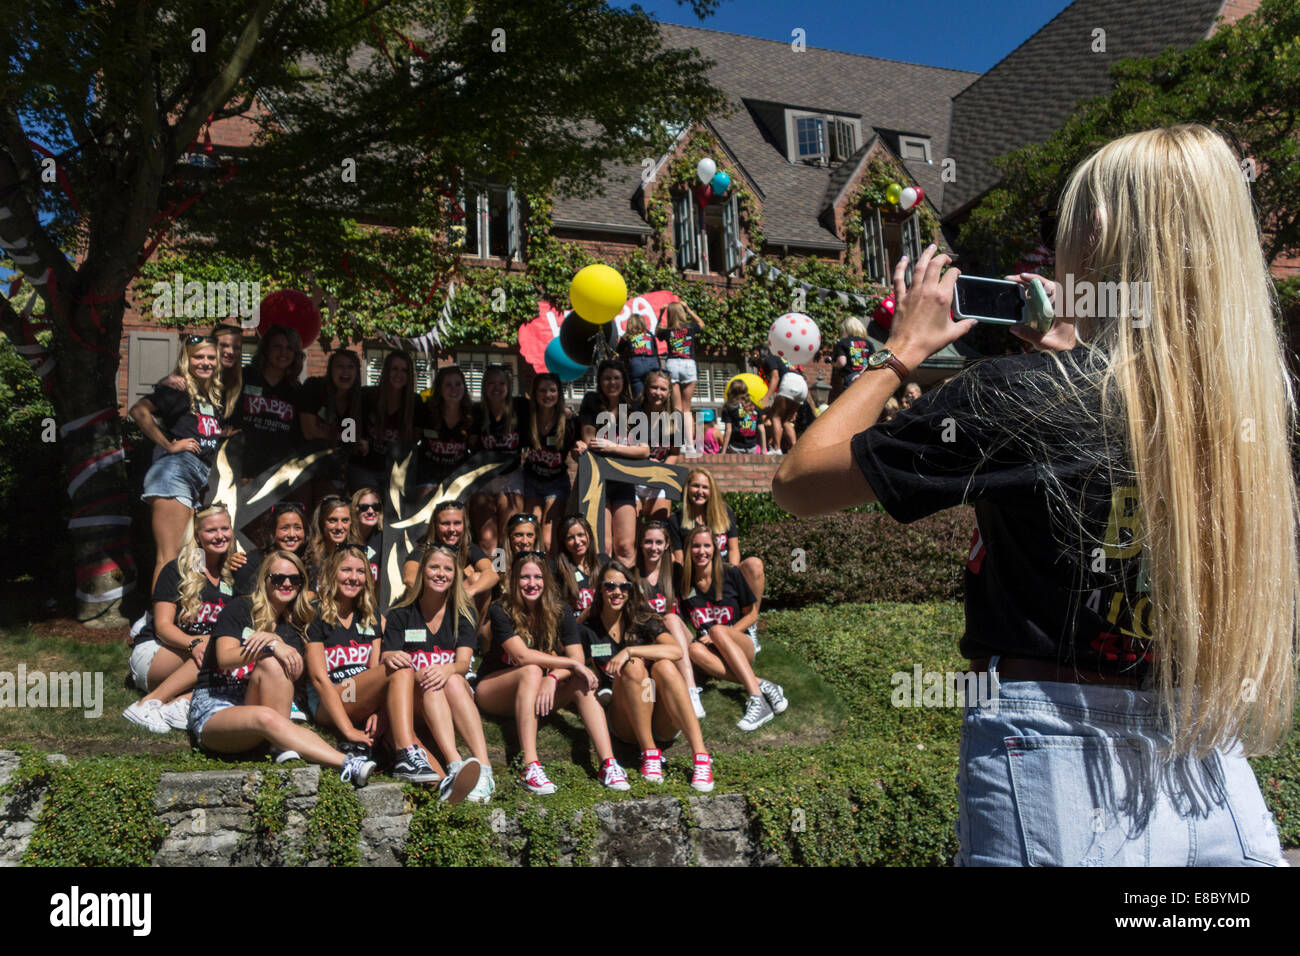 Kappa Kappa Gamma sorority party for bid week, University of Washington, Washington State, USA Stock Photo